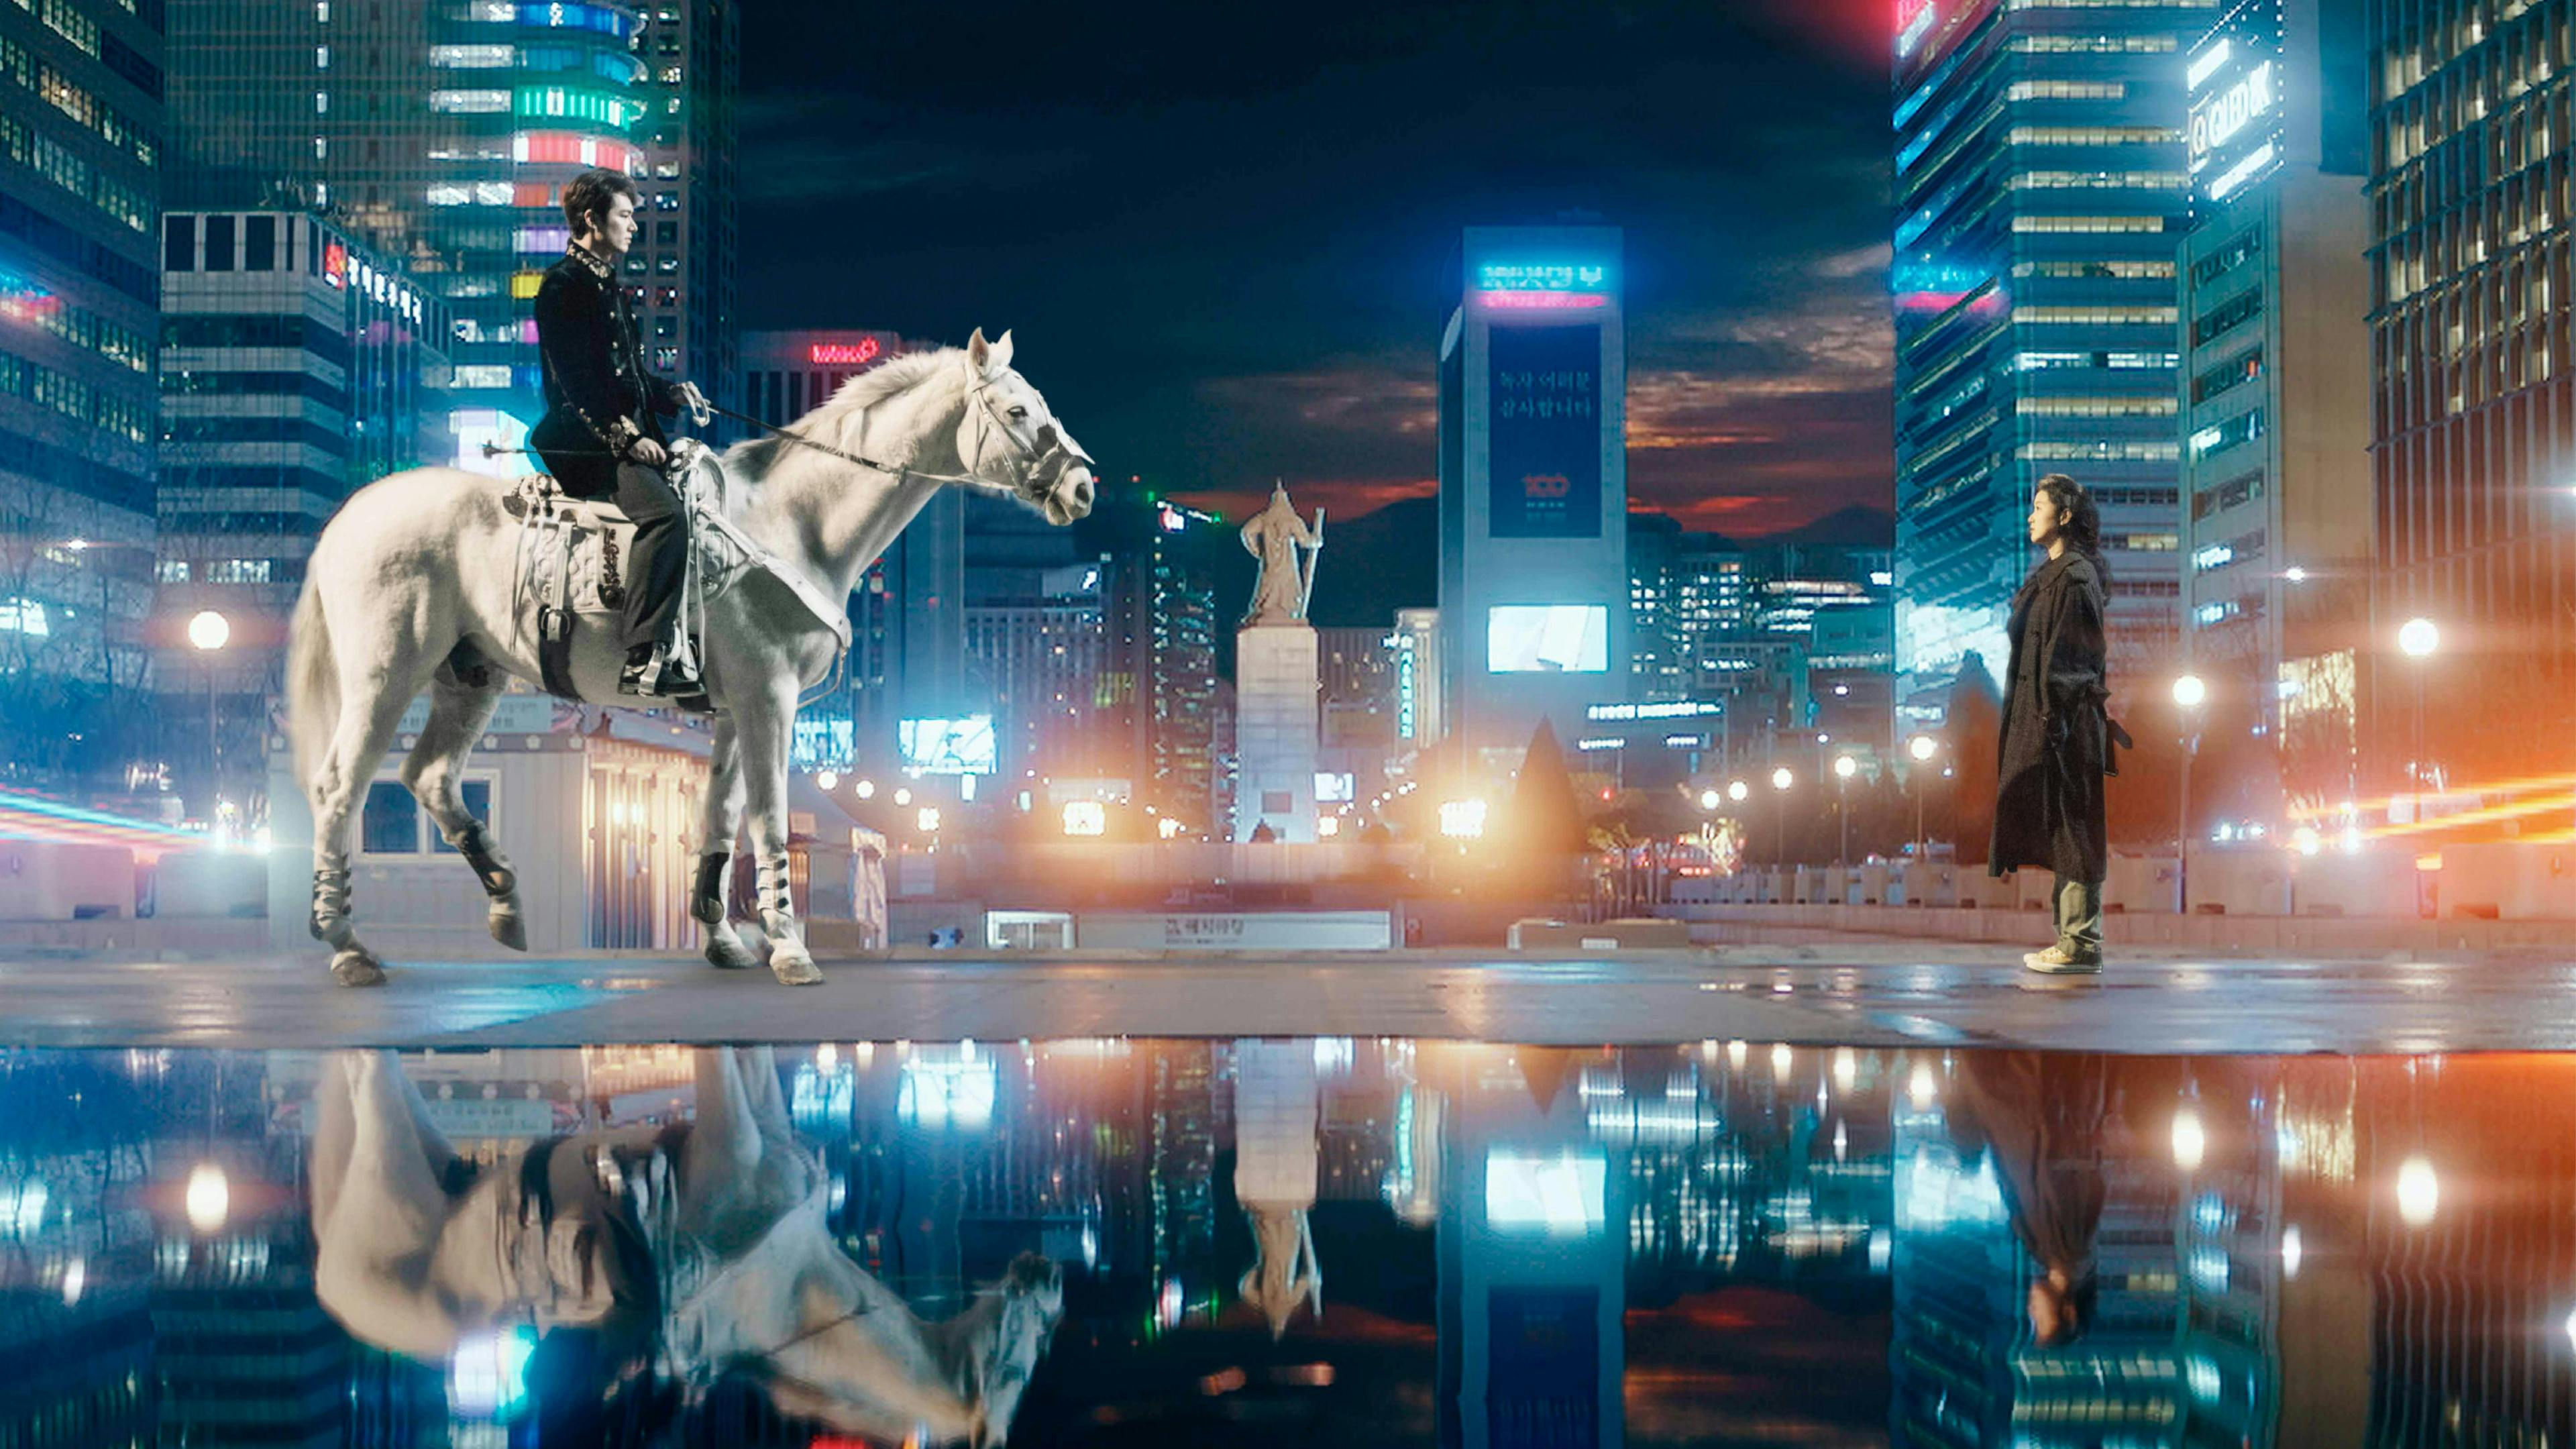 horse animal mammal person human city building town urban high rise